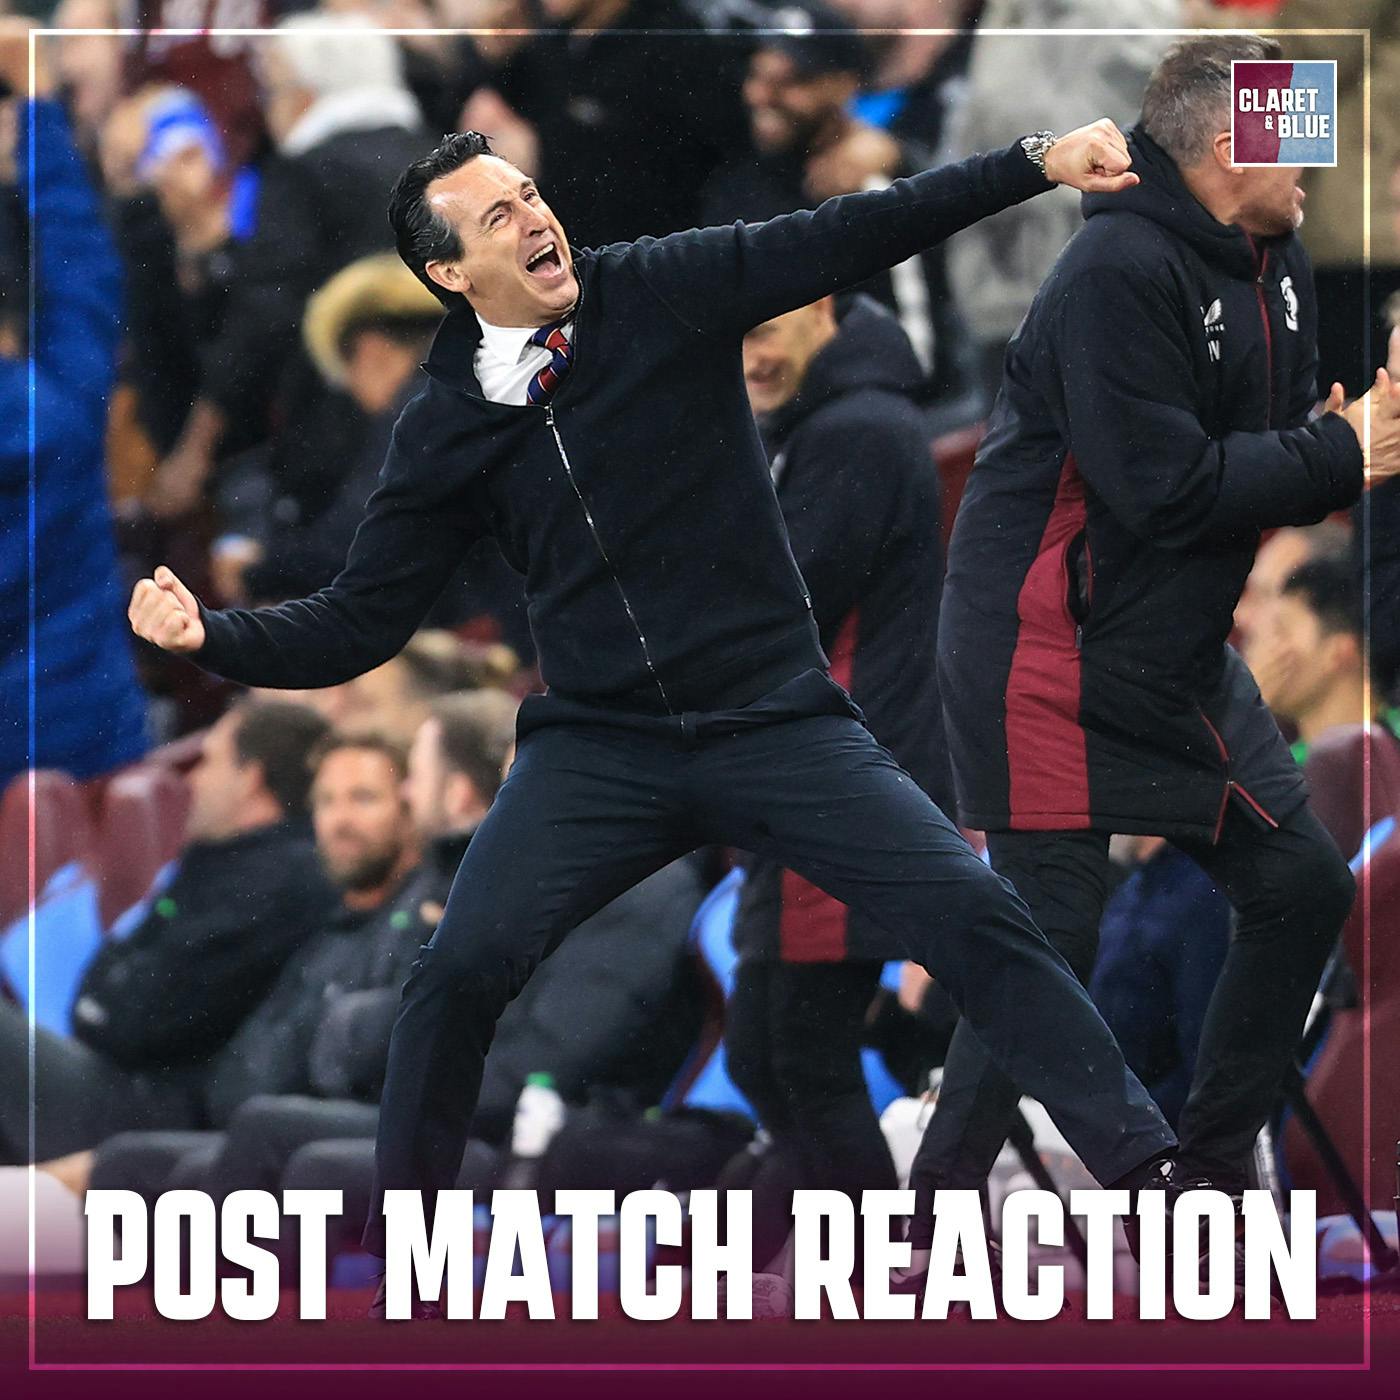 POST MATCH REACTION: Aston Villa 3-3 Liverpool